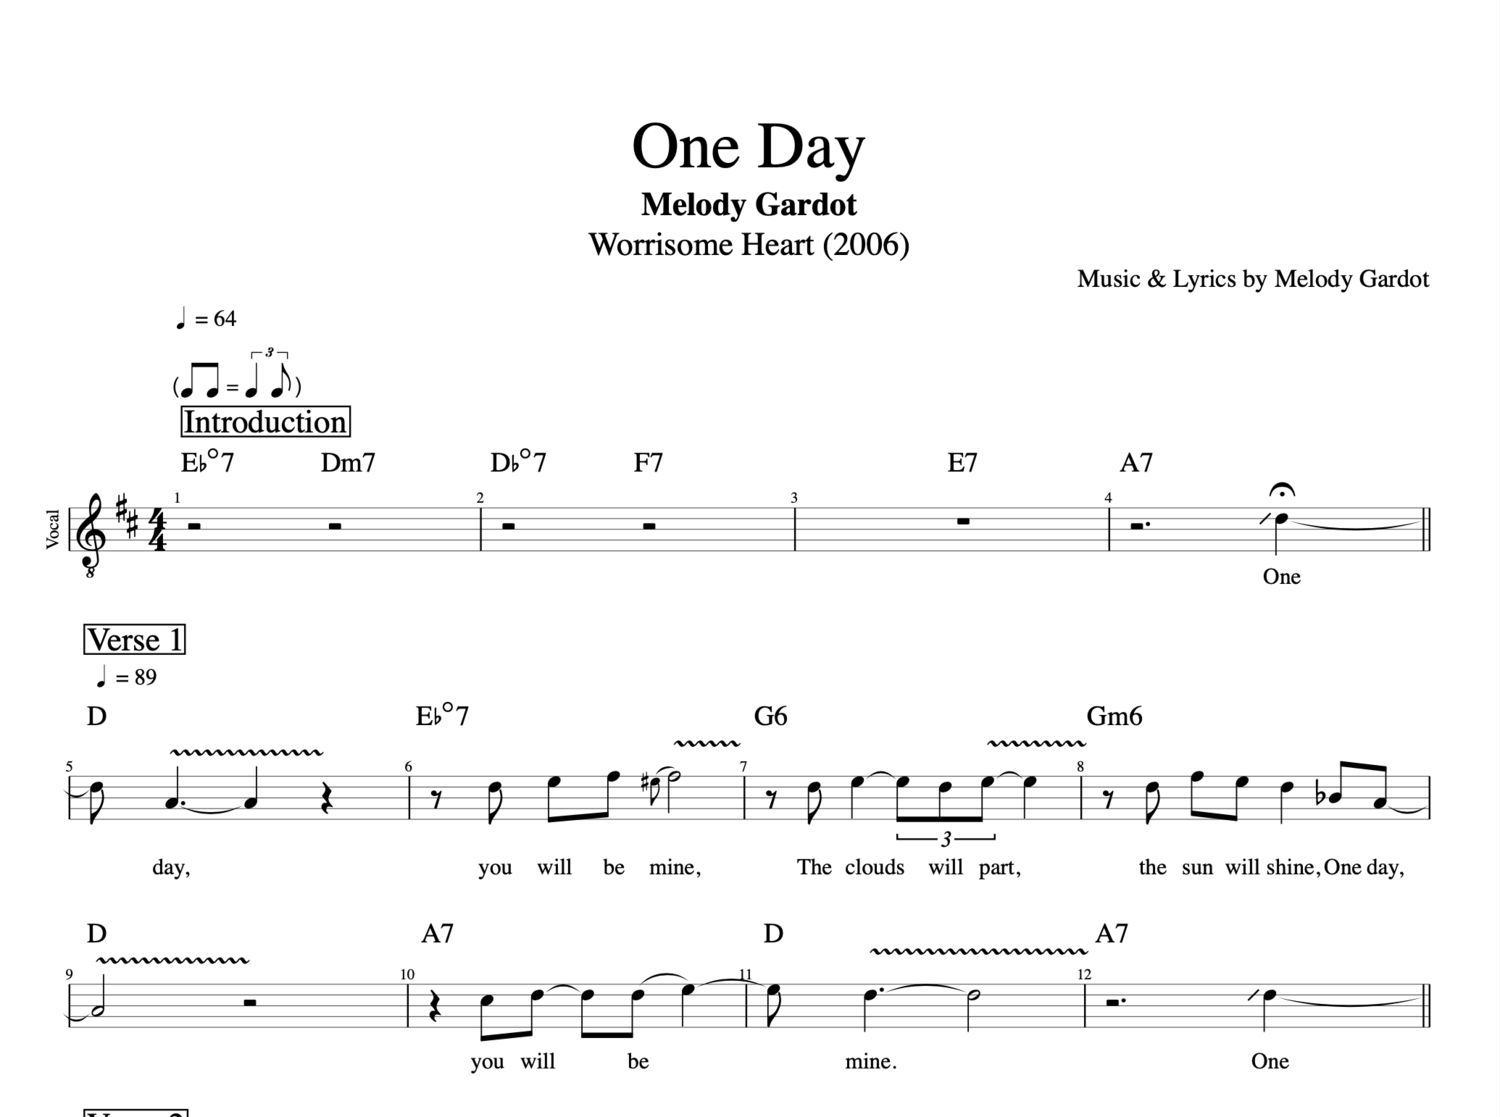 One Day Melody Gardot Guitar Voice Trumpet Tab Chords Sheet Music Lyrics Score Play Like The Greats Com